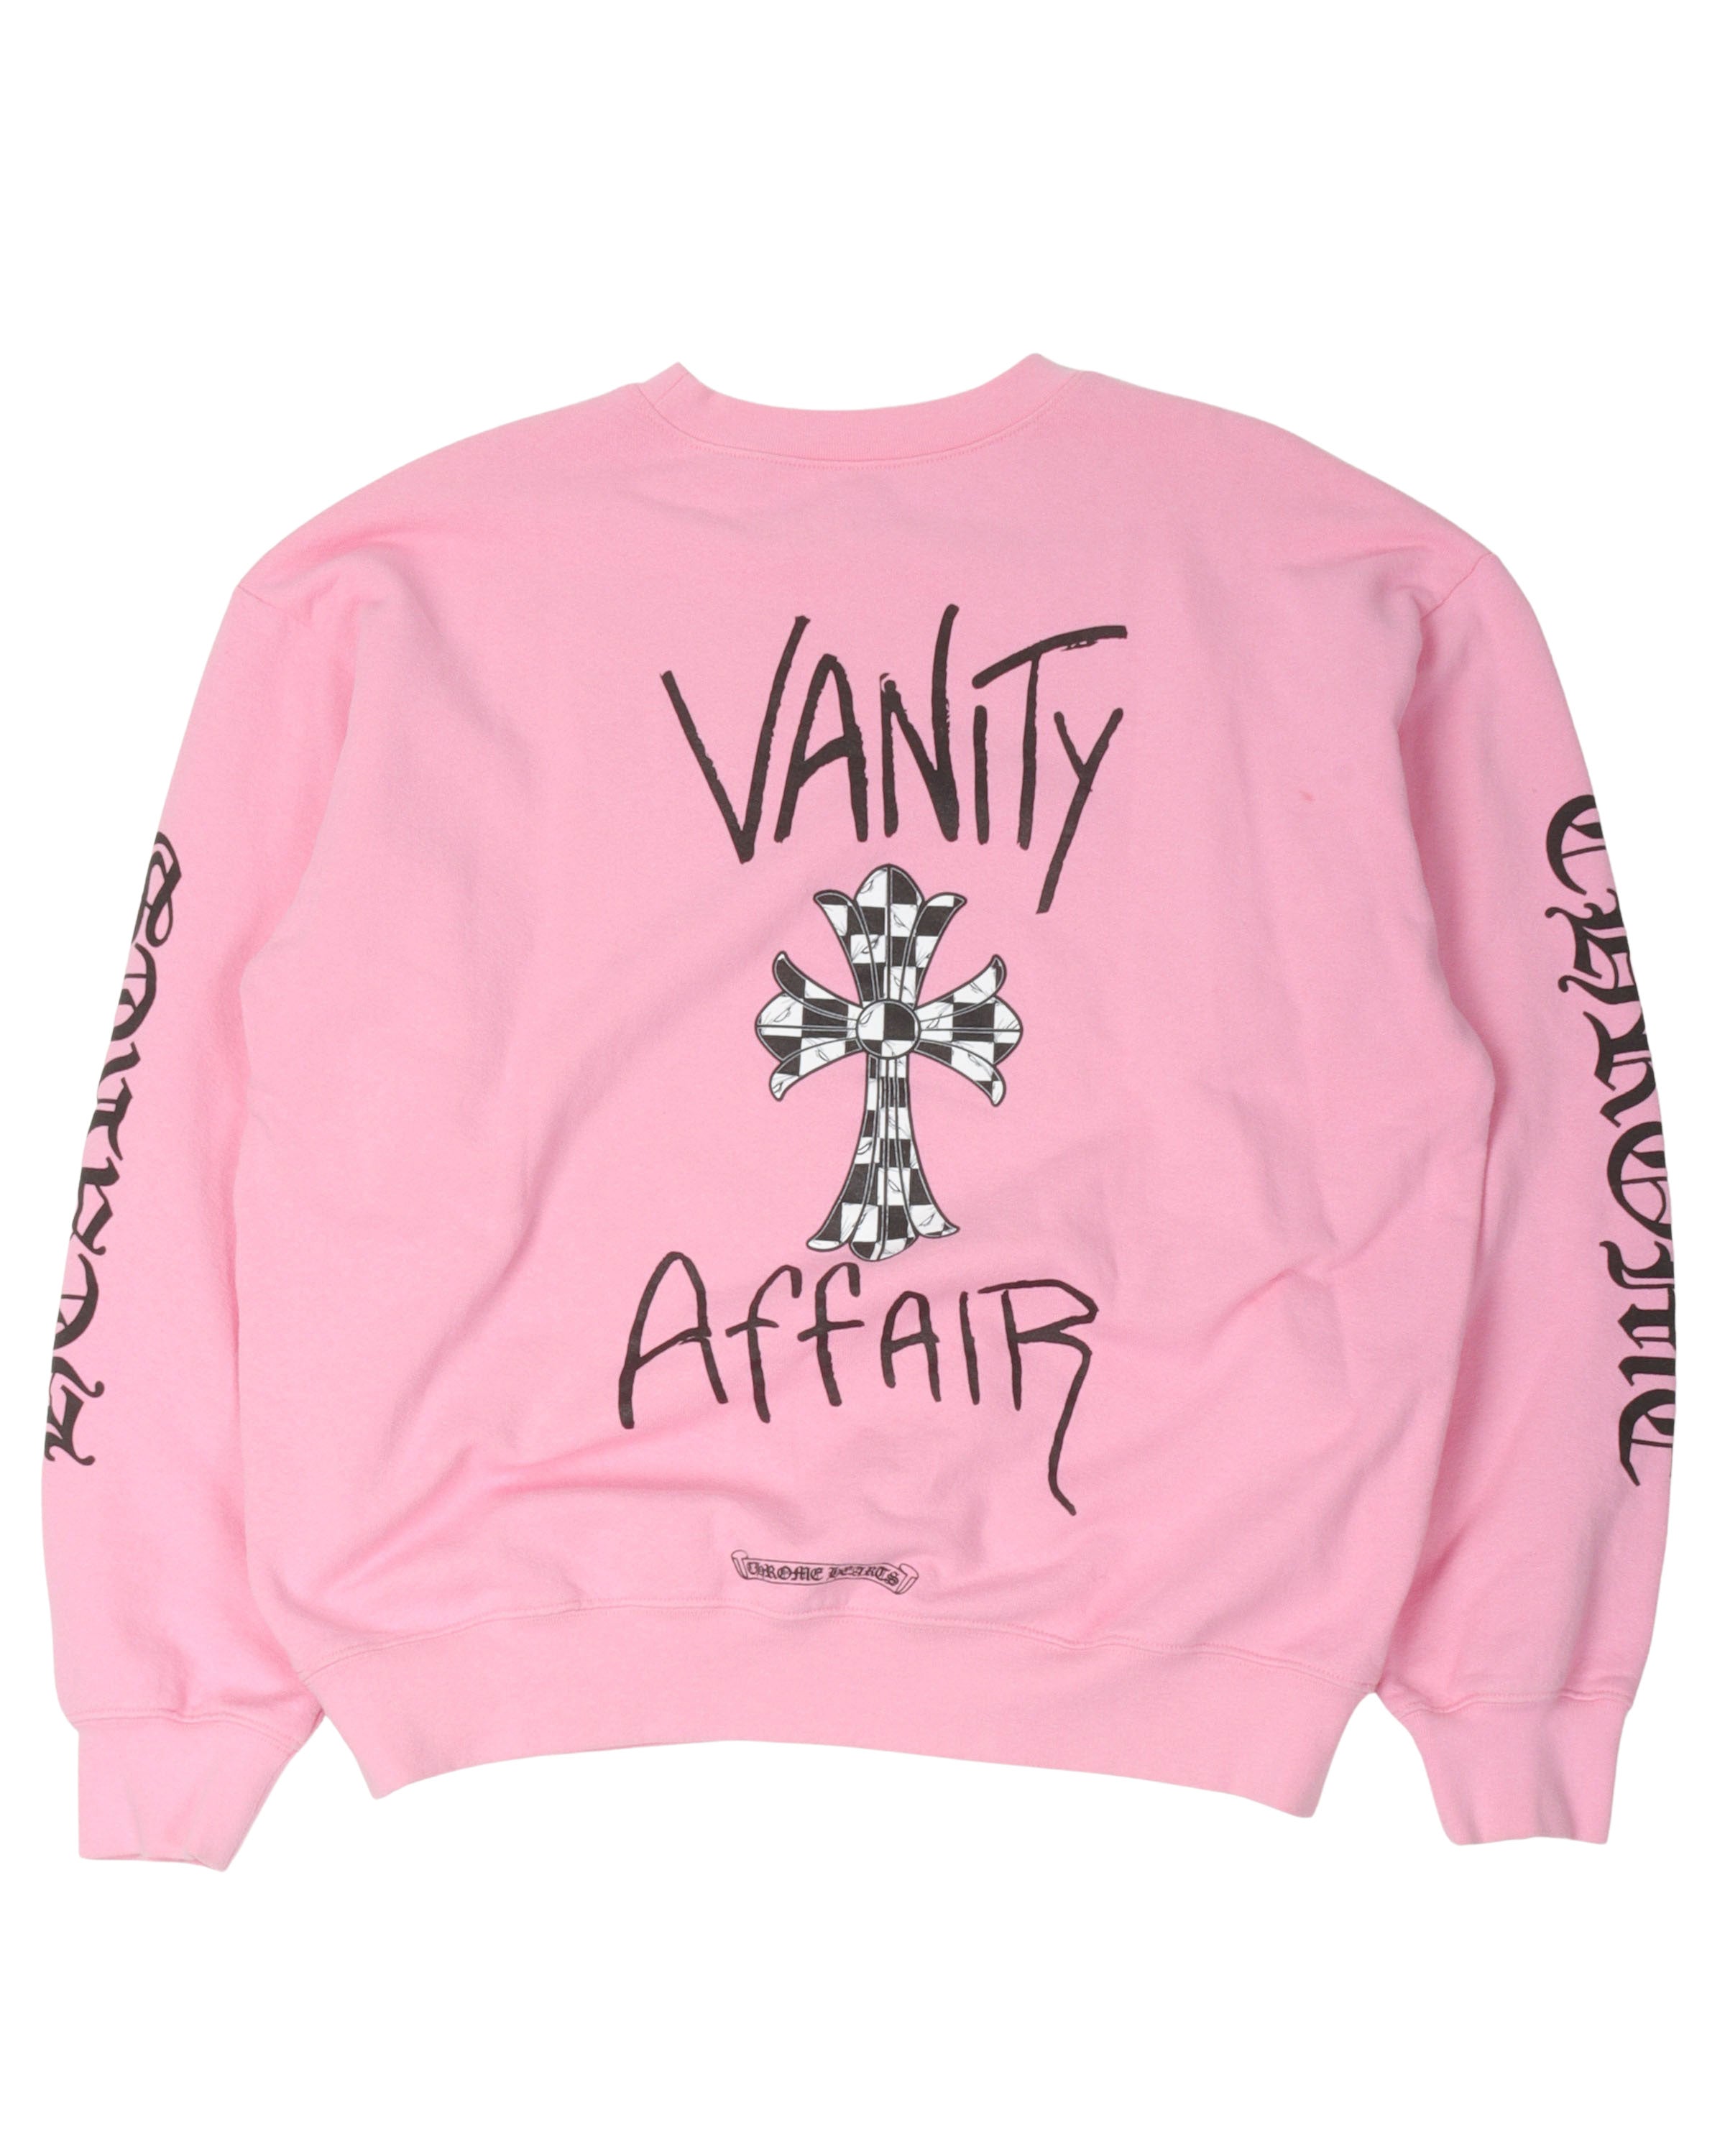 Matty Boy Vanity Affair Sweatshirt